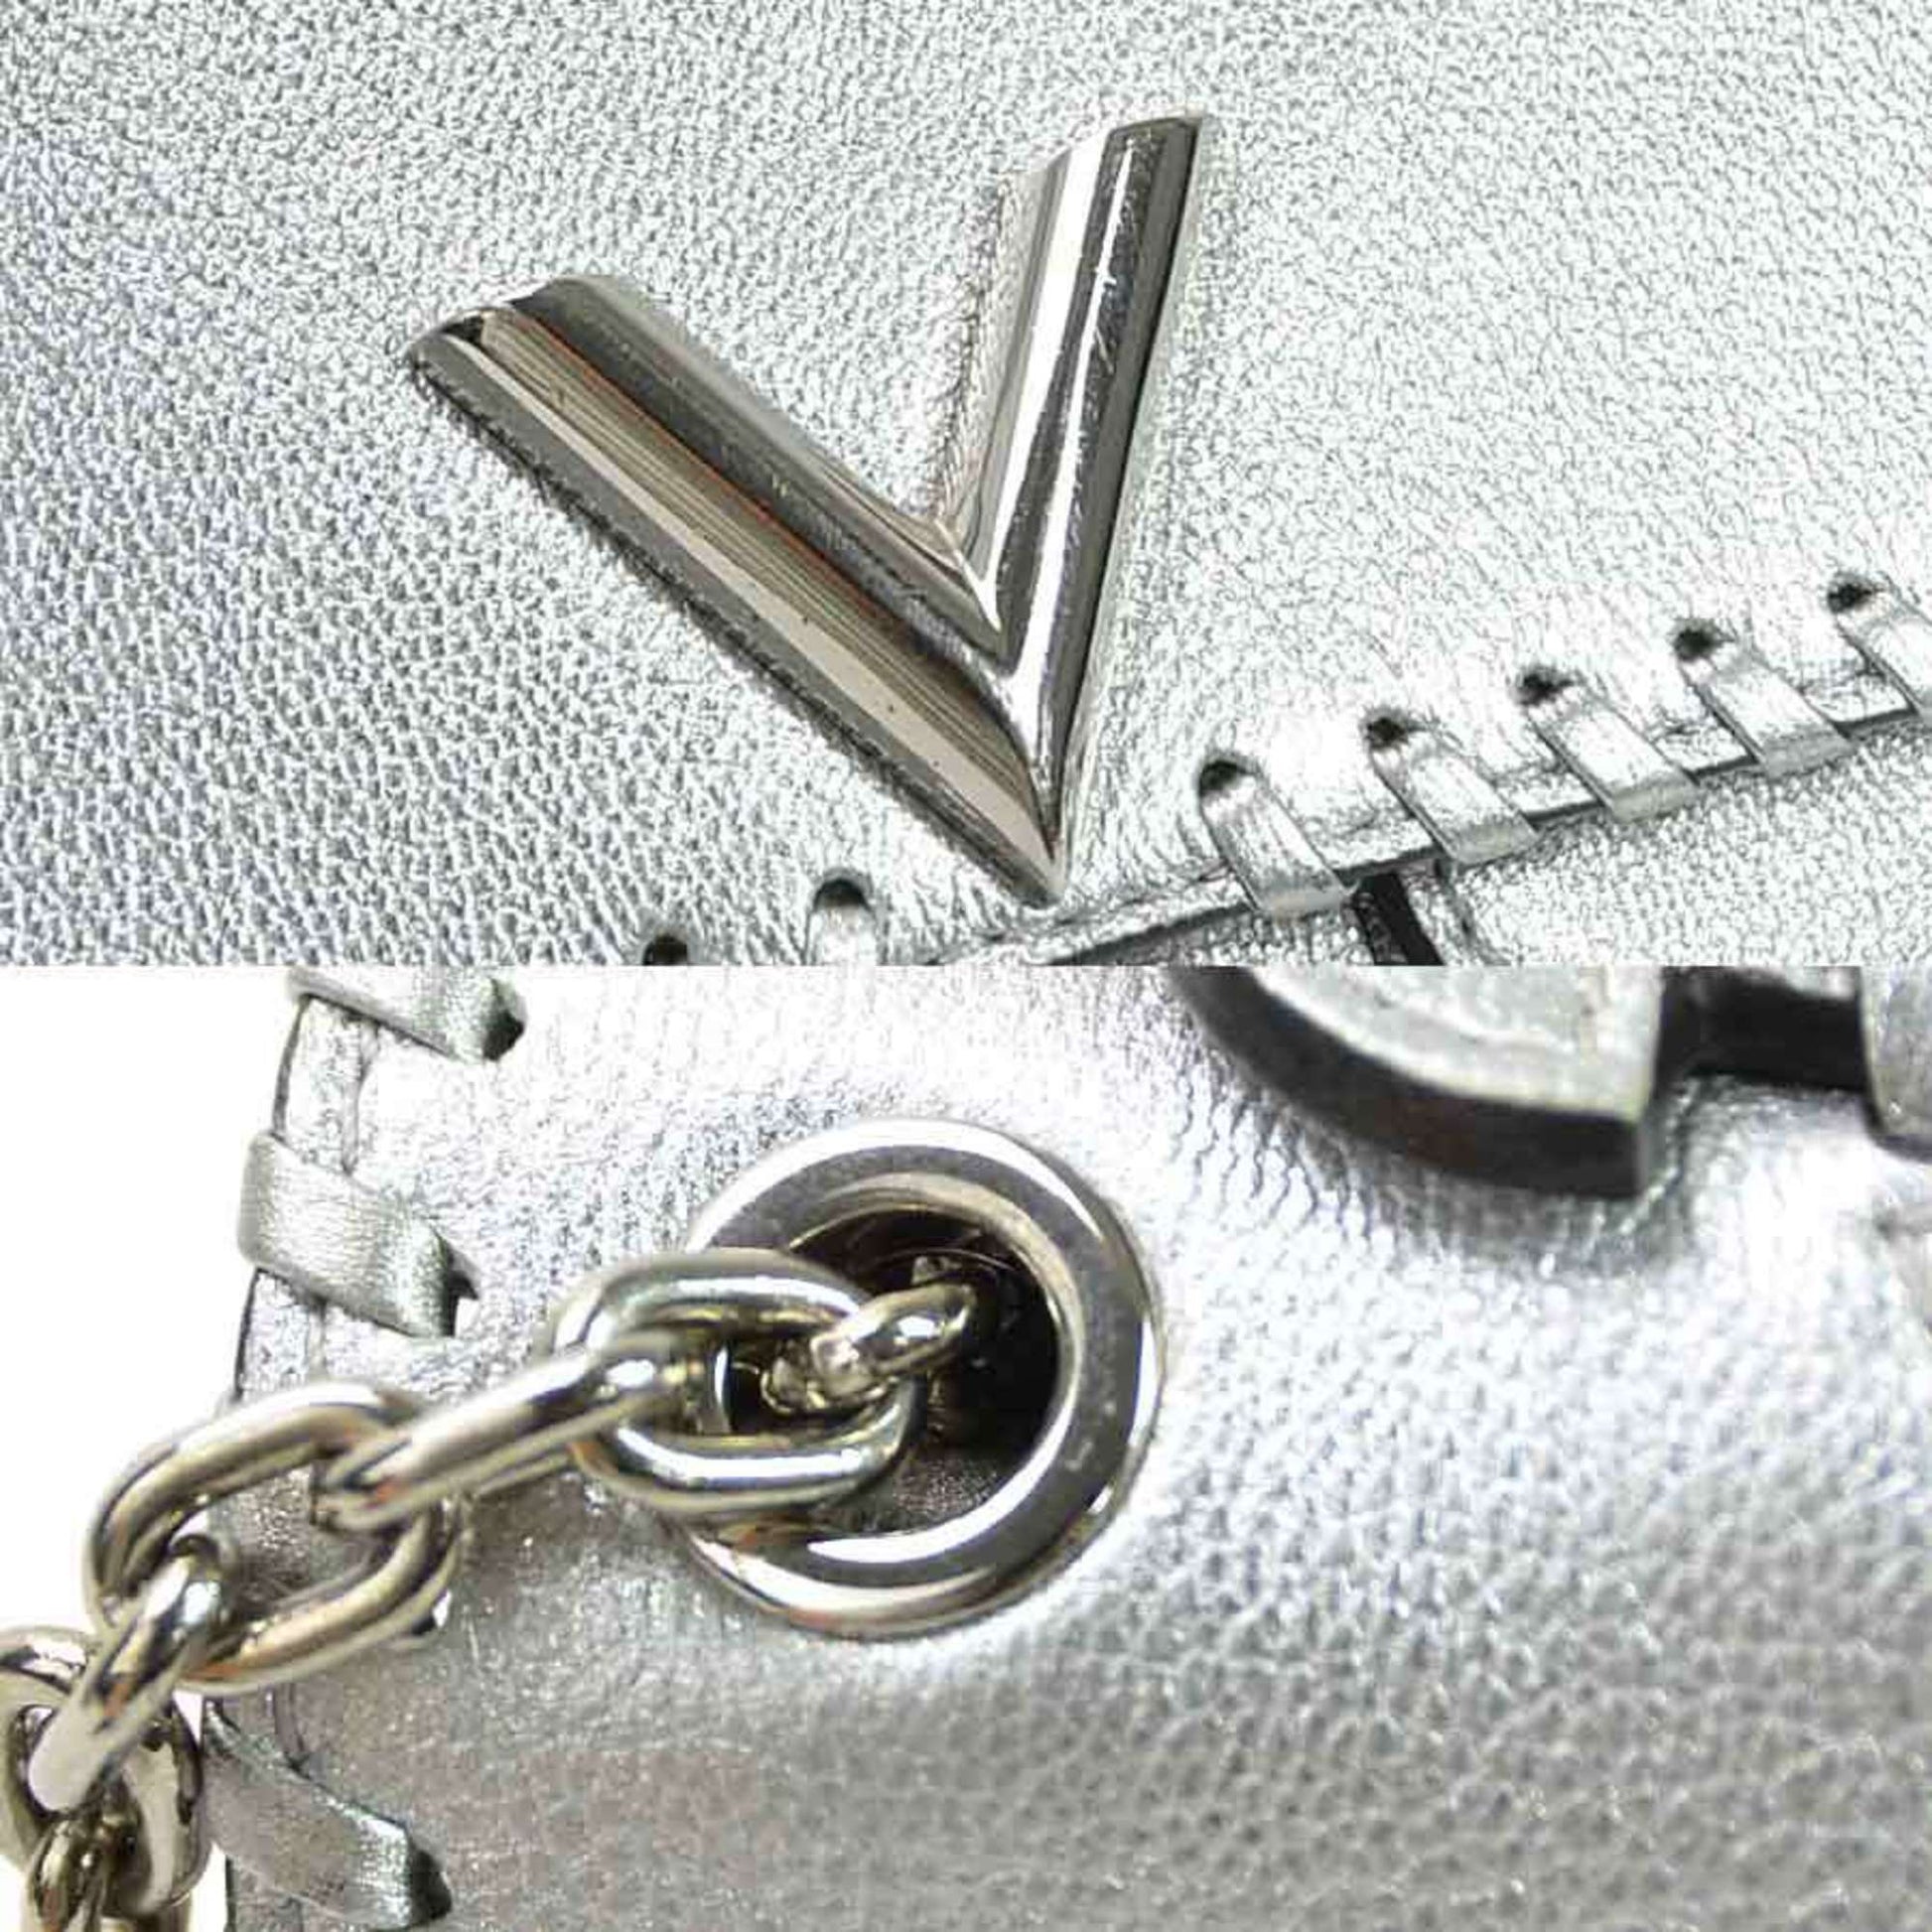 LOUIS VUITTON Very Chain Shoulder Bag M43201